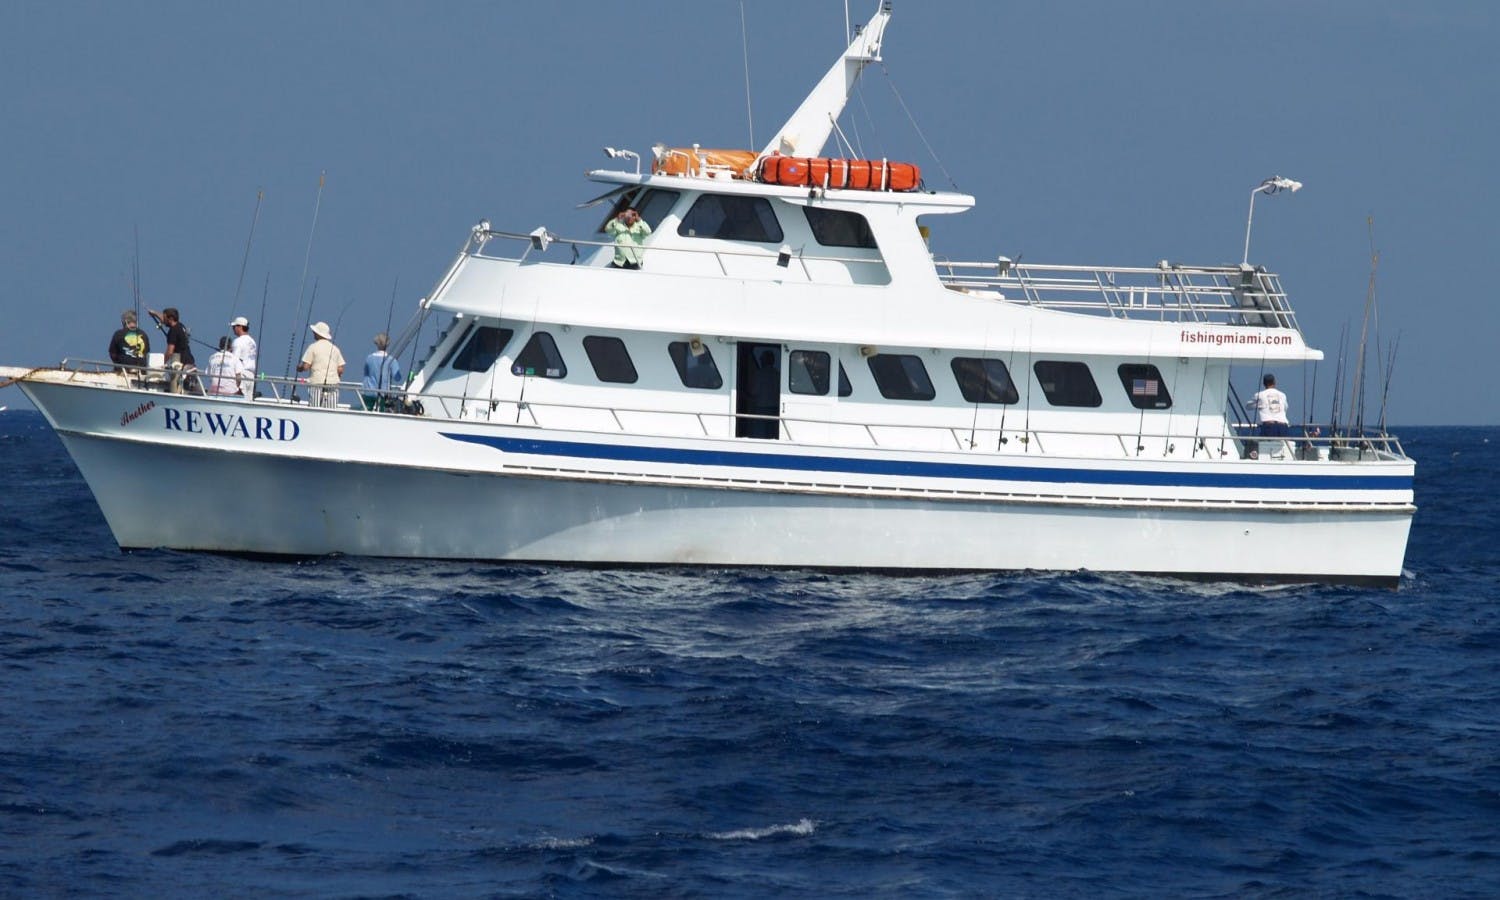 fishing tour - miami - another reward - ship.jpg